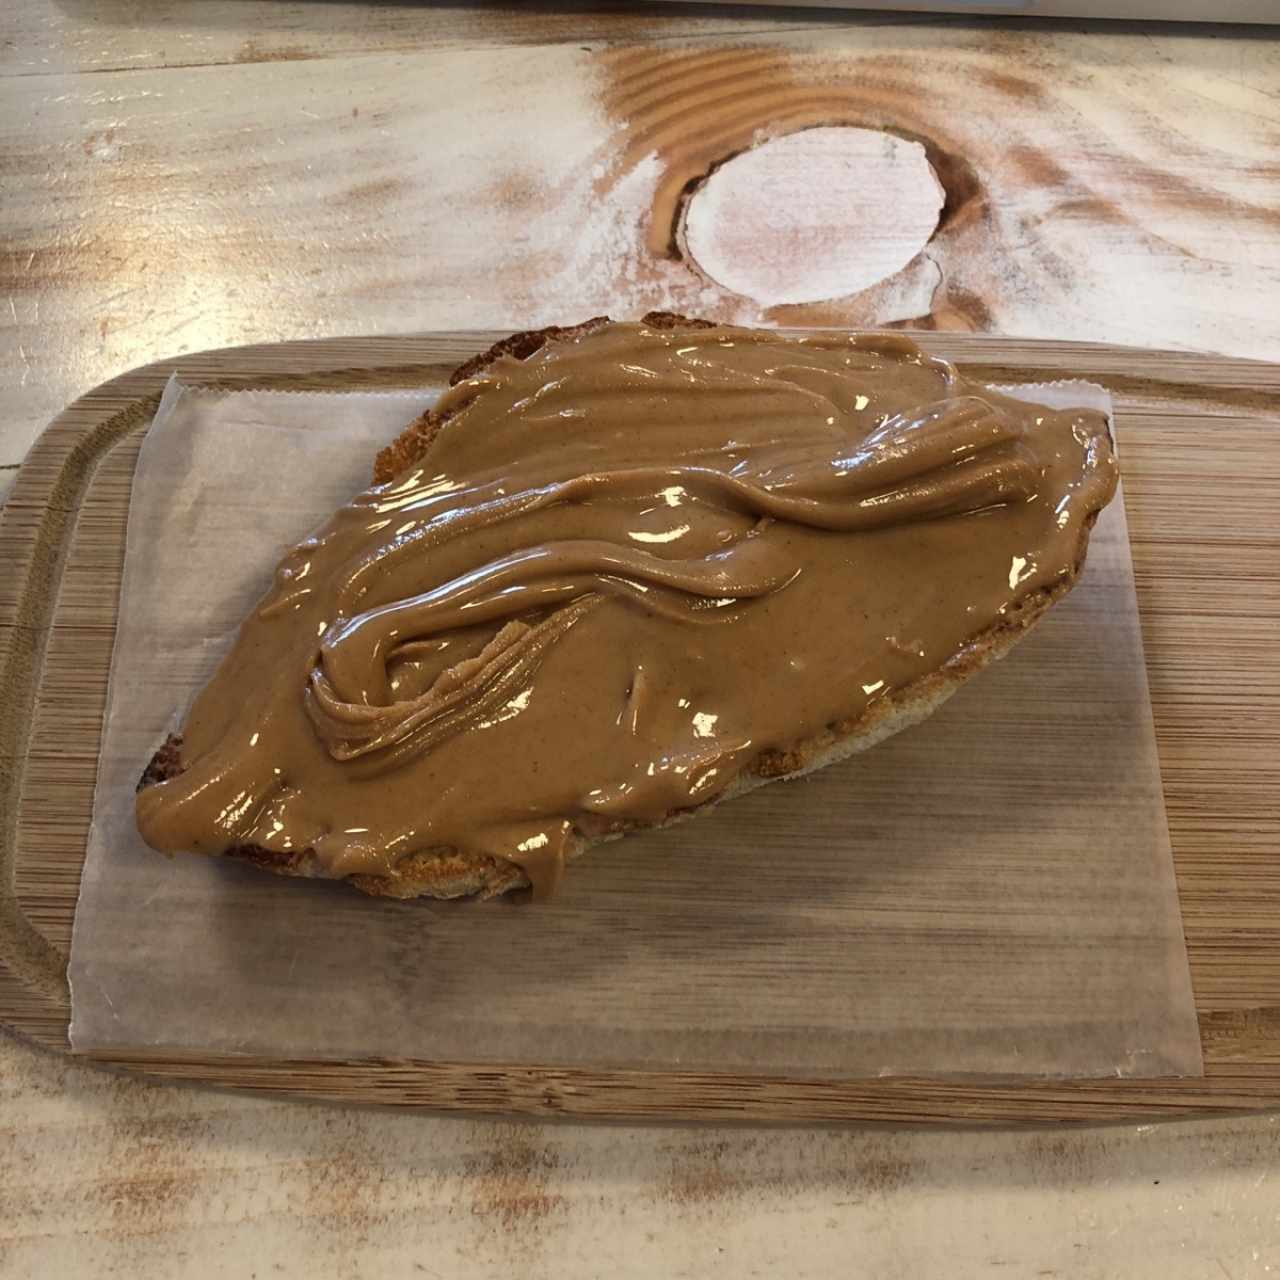 Peanut butter toast